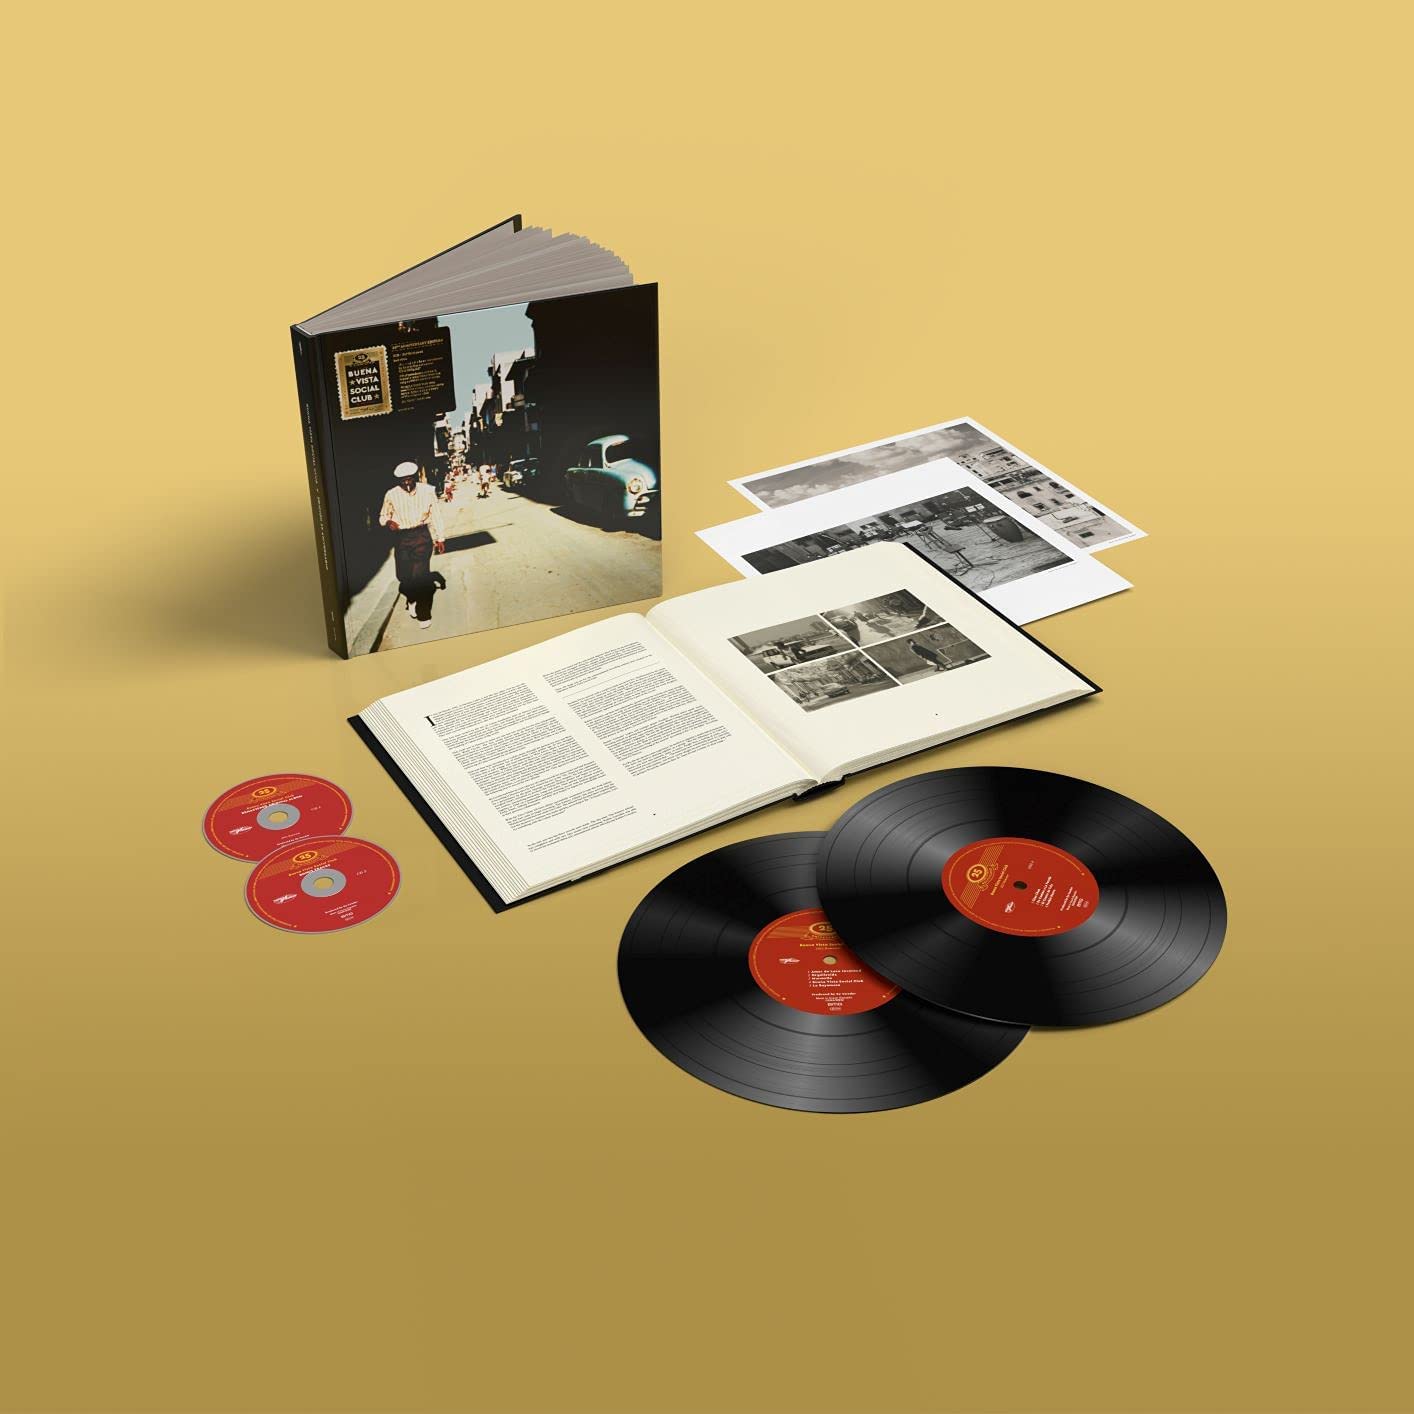 Buena Vista Social Club (25th Anniversary Edition) [Deluxe Bookpack] – LP  Club